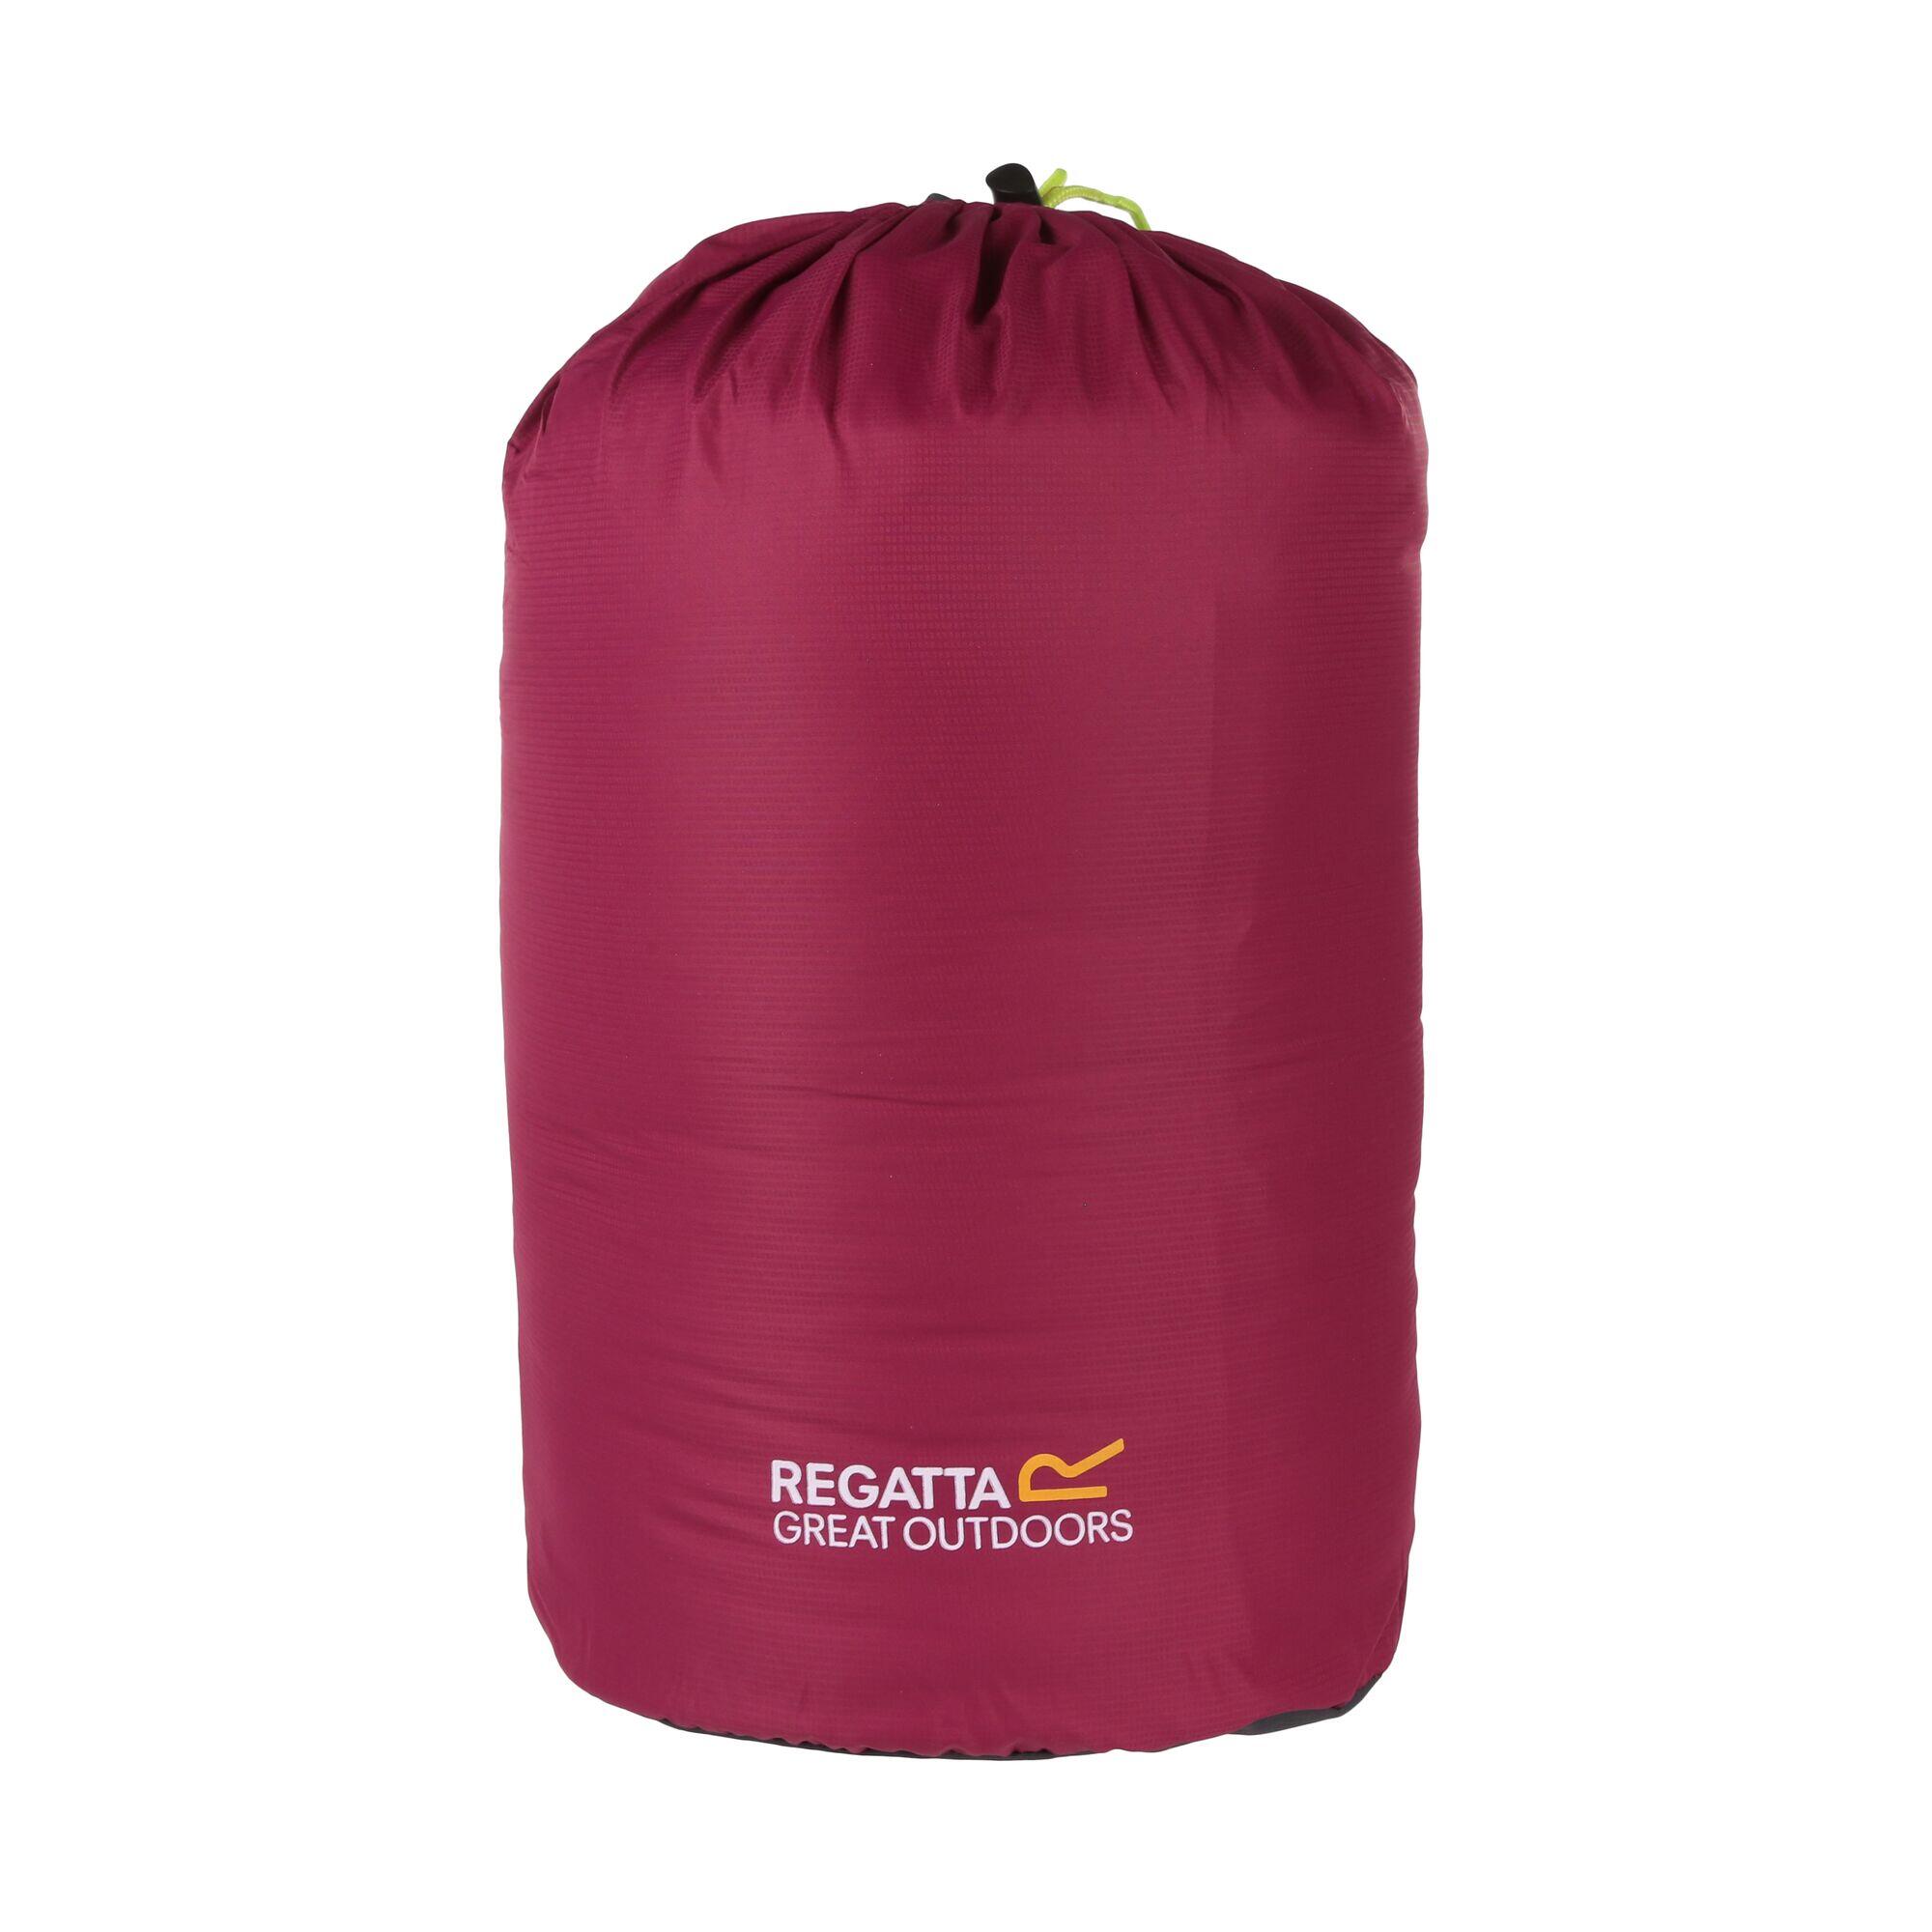 Hilo Boost Adults' Camping Sleeping Bag - Azalia Pink/Ebony 4/4